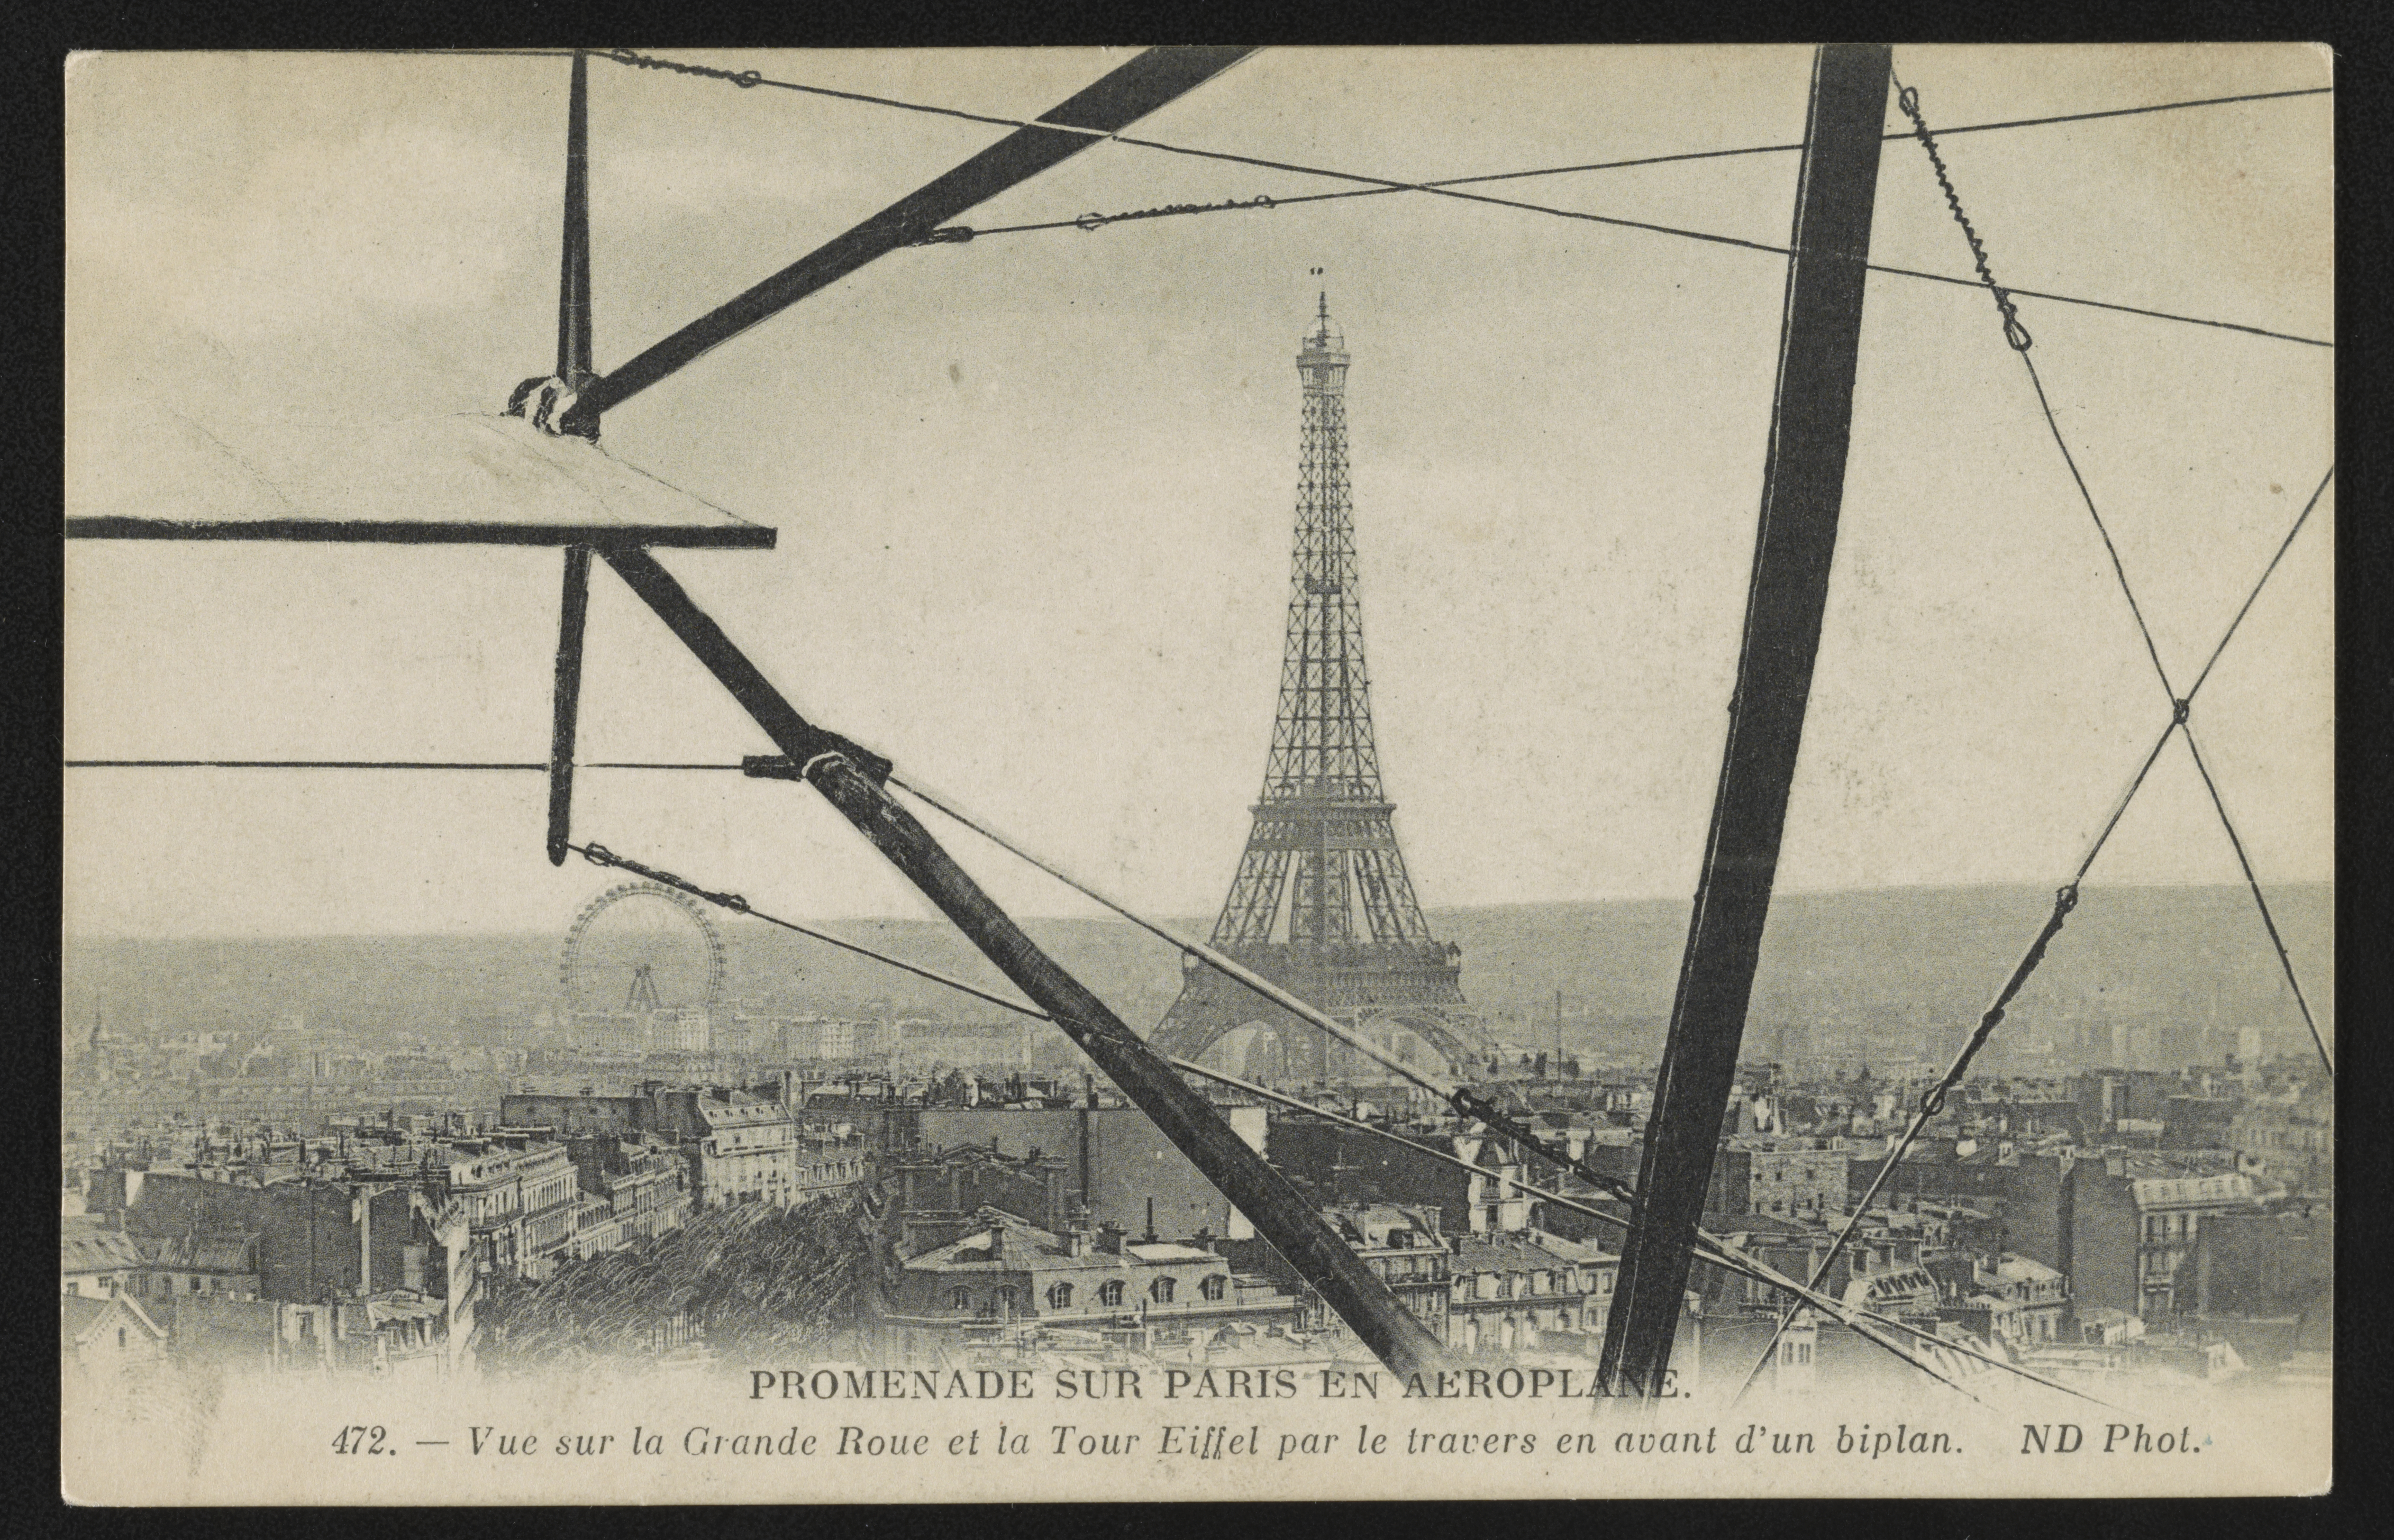 Étienne Neurdein, Promenade sur Paris en aeroplane, ca. 1904-14